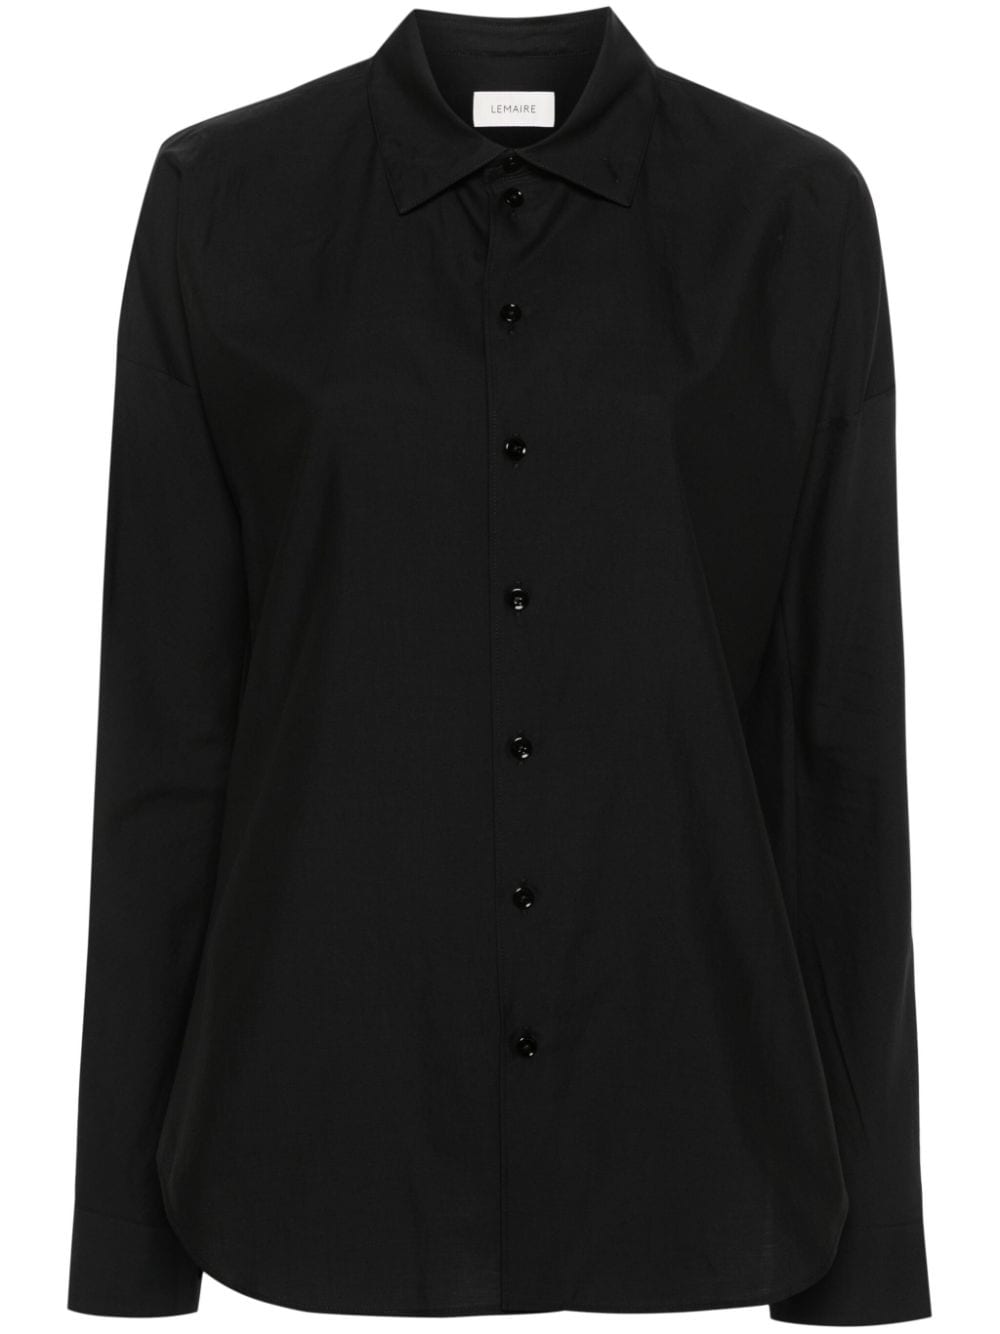 LEMAIRE multi-way collar shirt - Black von LEMAIRE